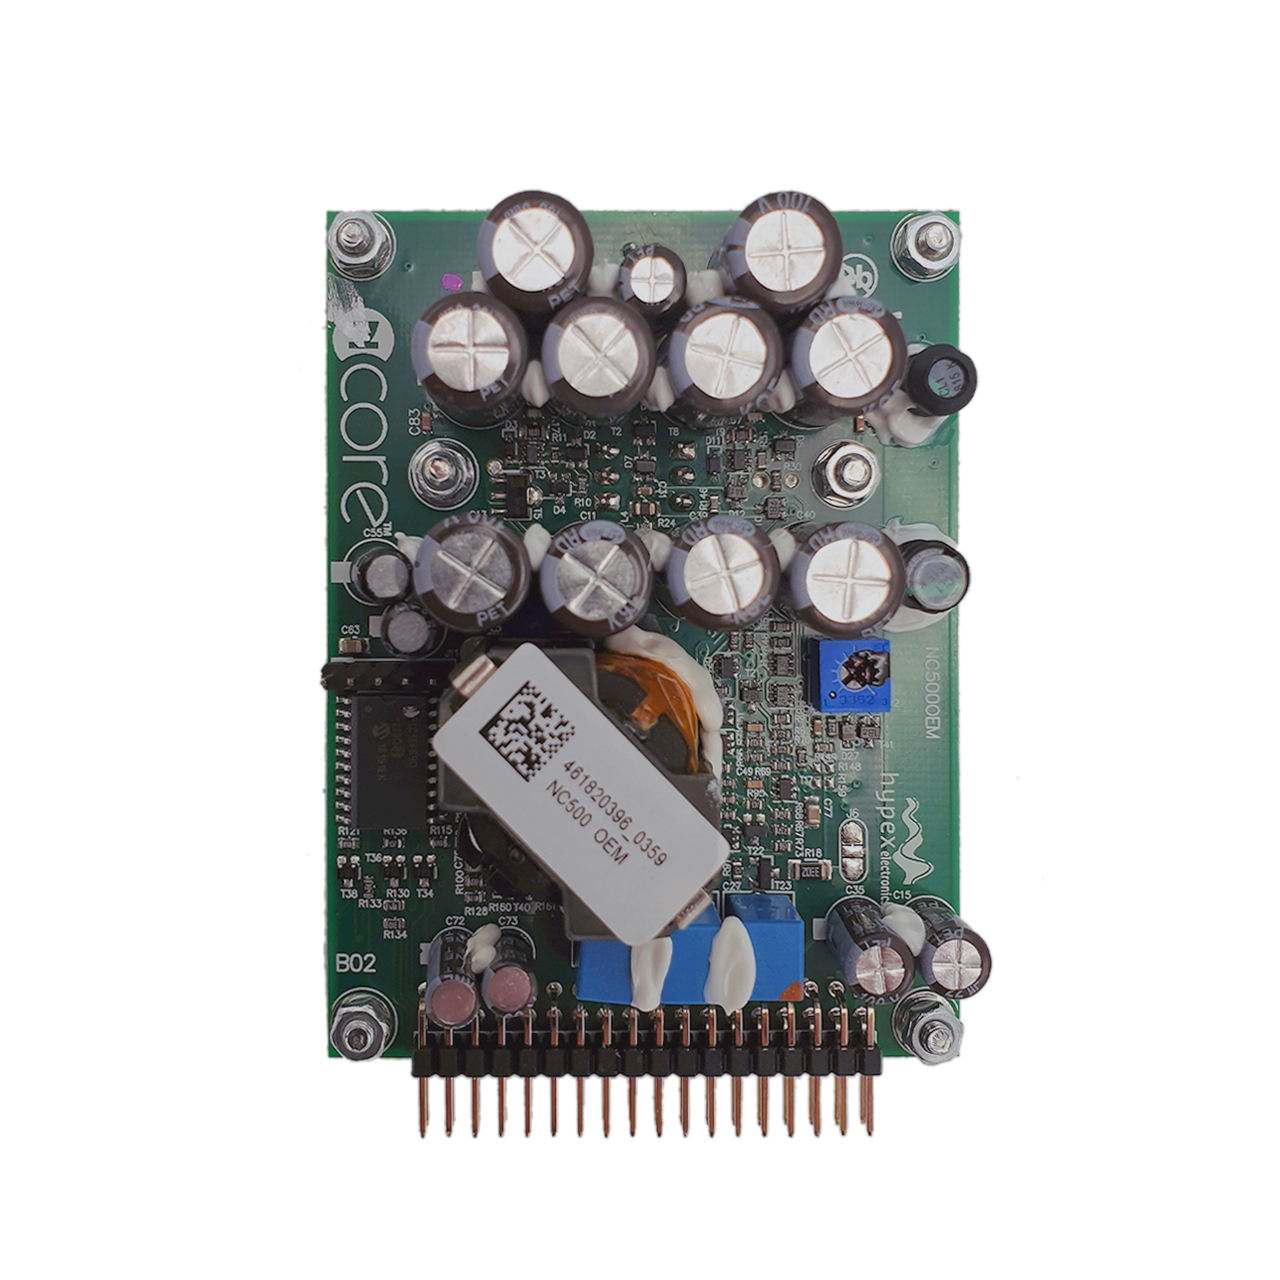 Hypex NC500 OEM amplifier module